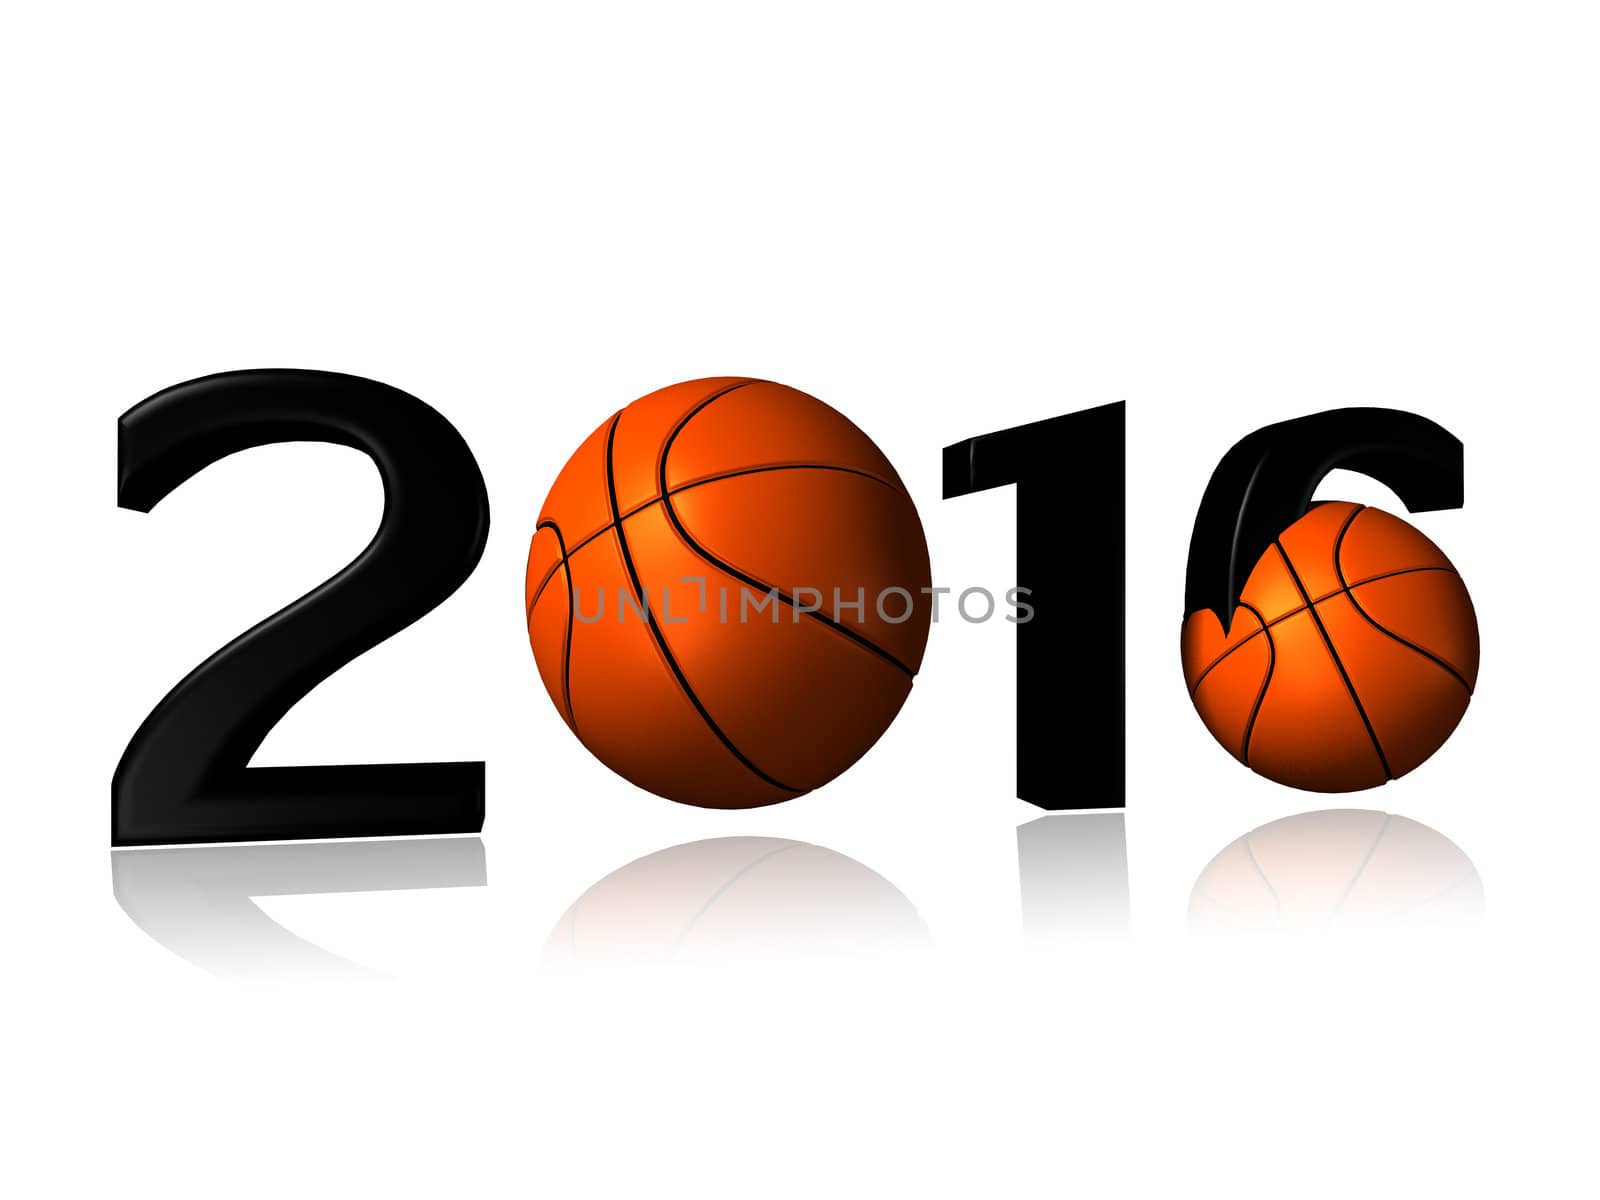 It's a big 2016 basket logo on a white background